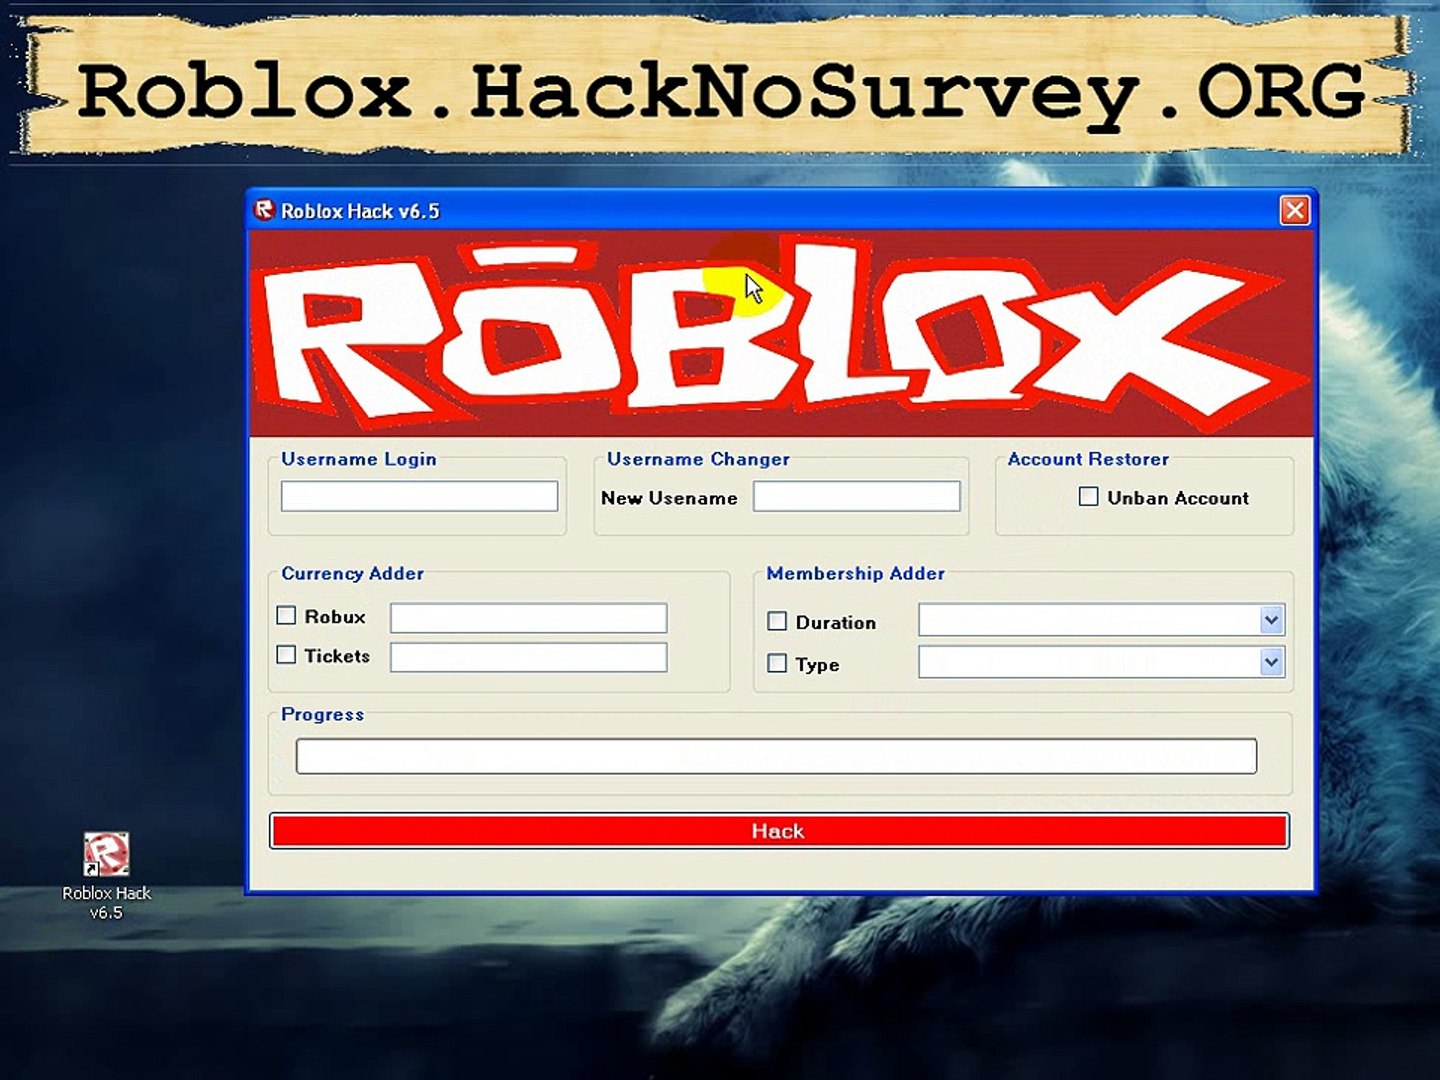 Roblox Hack Membership Adder Robux Tix Generator 2015 Video Dailymotion - roblox hack robux free 2015